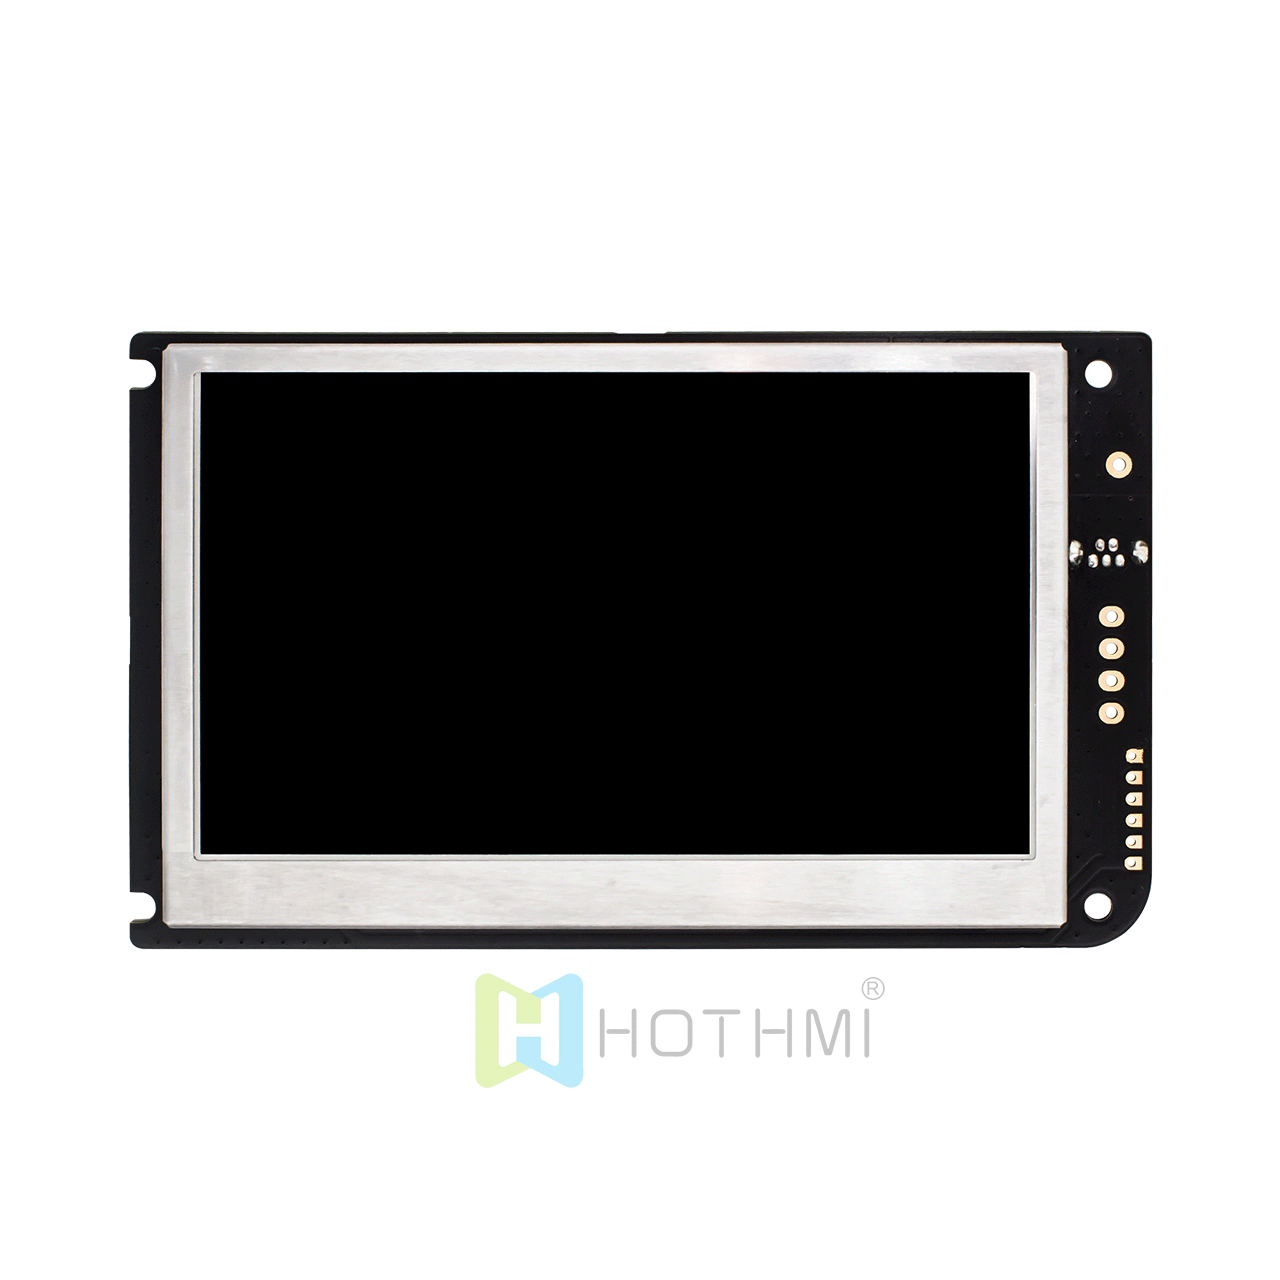 4.3-inch 800x480 dot matrix smart serial screen TFT LCD display module URAT HMI IPS sunlight readable compatible with Raspberry Pi